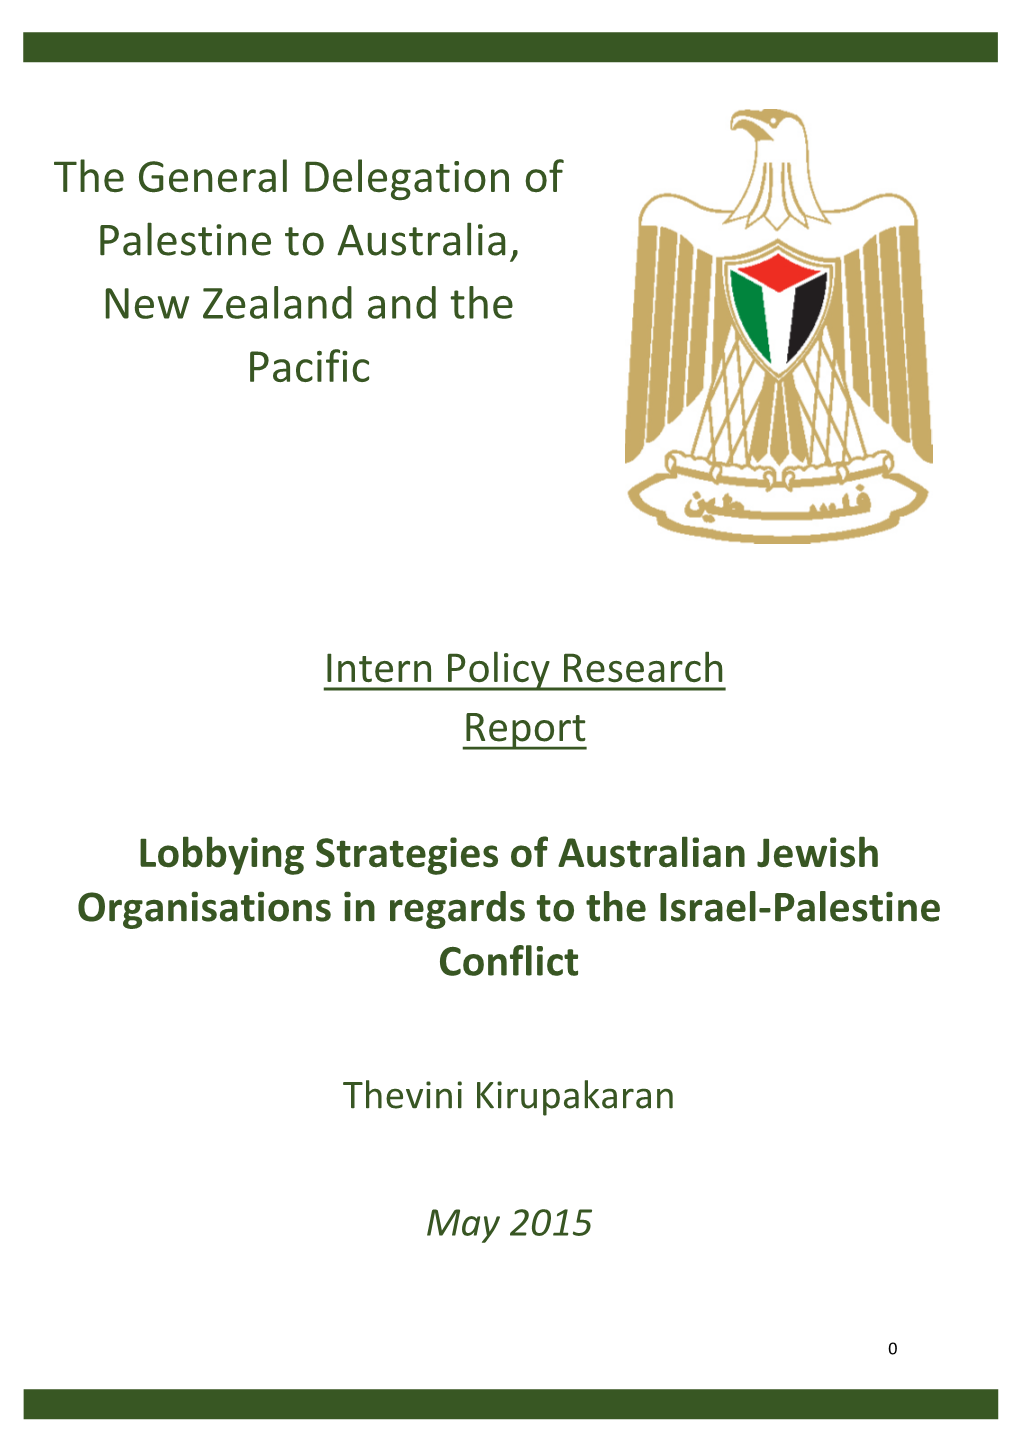 Lobbying Strategies of Australian Jewish Organisations in Regards to the Israel-Palestine Conflict